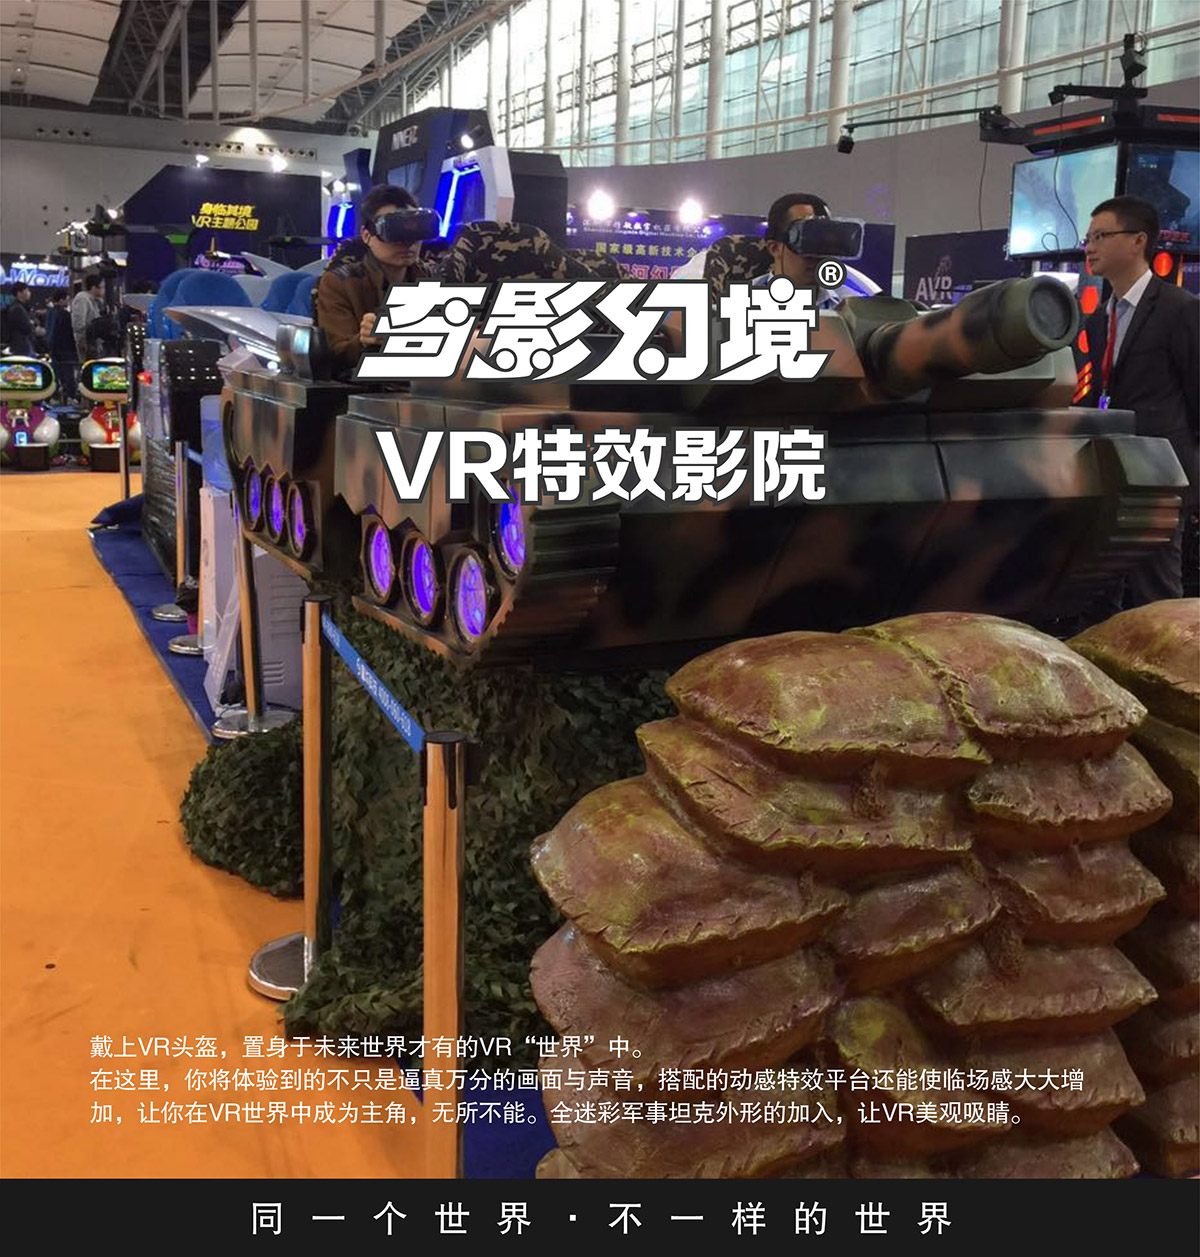 VR台风首款VR特效影院坦克对战.jpg